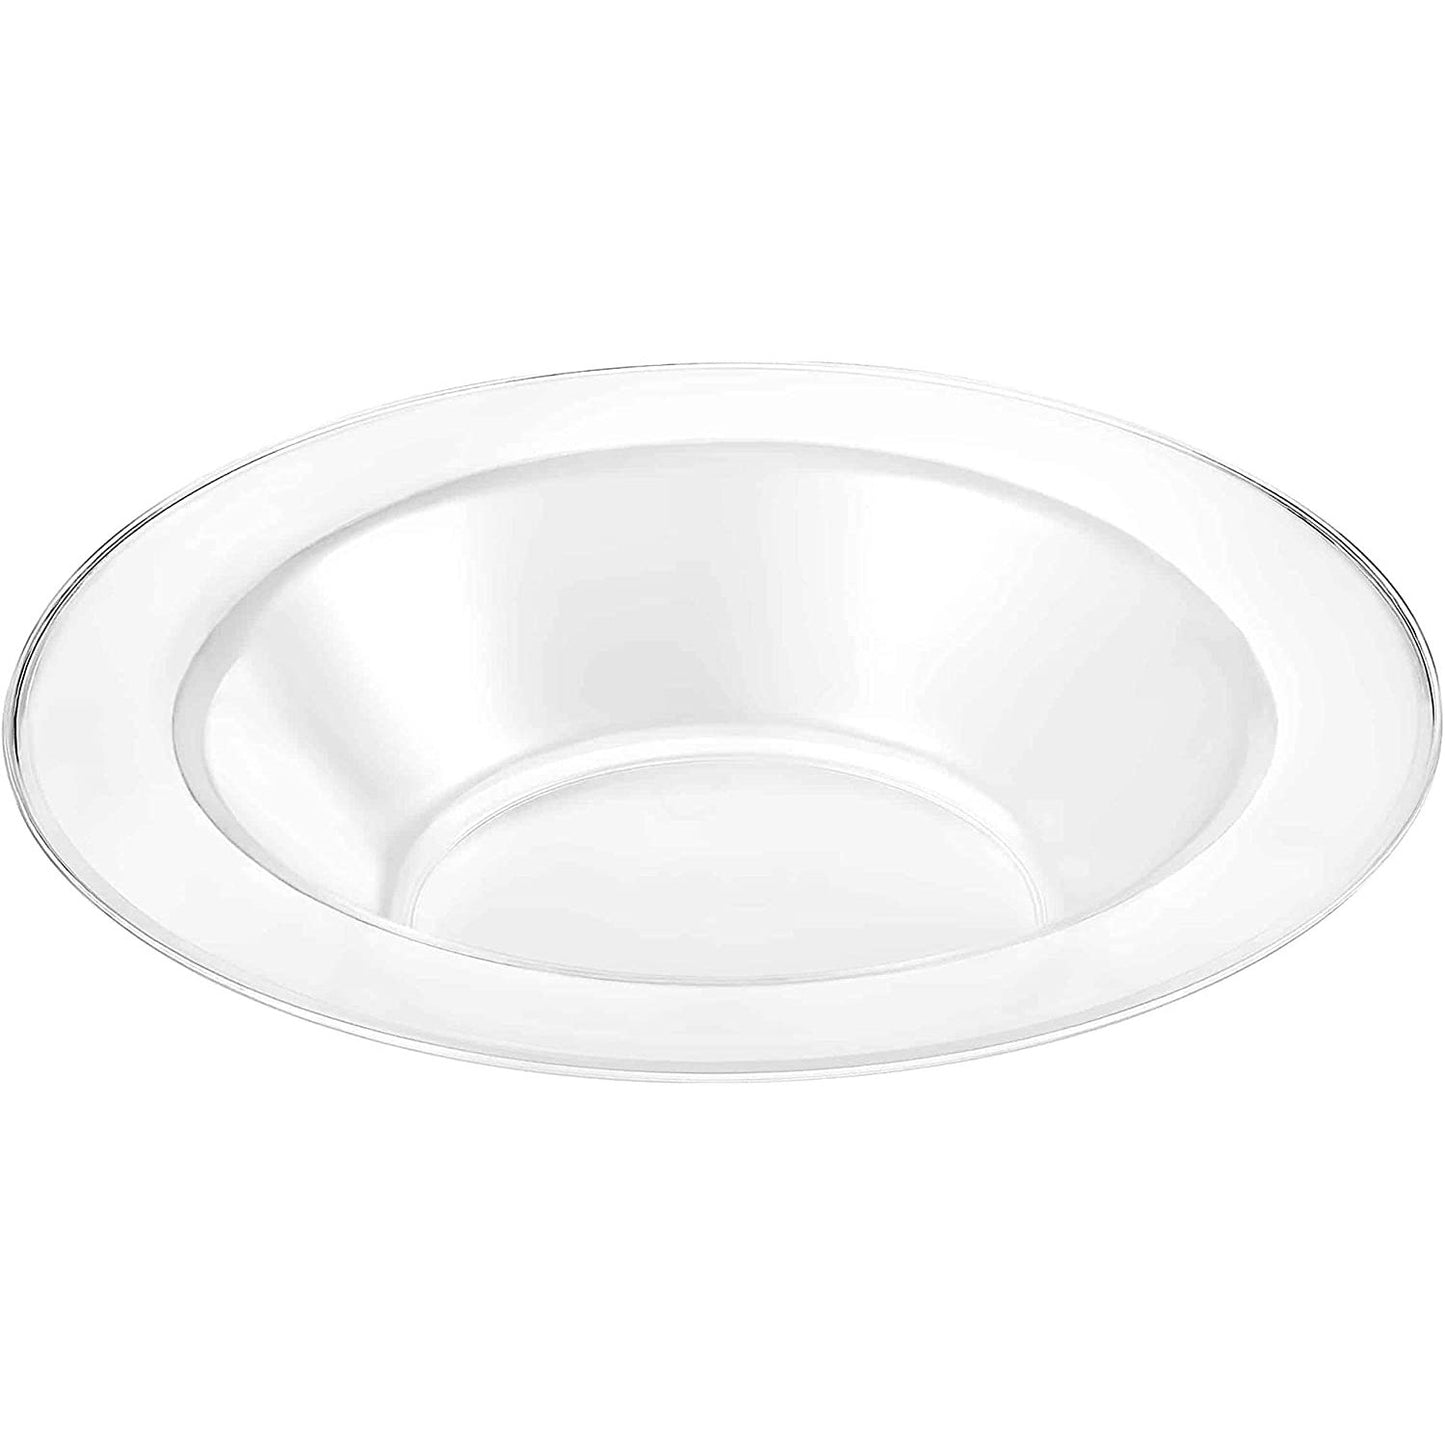 "BULK" Magnificence Heavyweight 5oz Plastic Bowls Value Pack White Pearl Bowls Lillian   